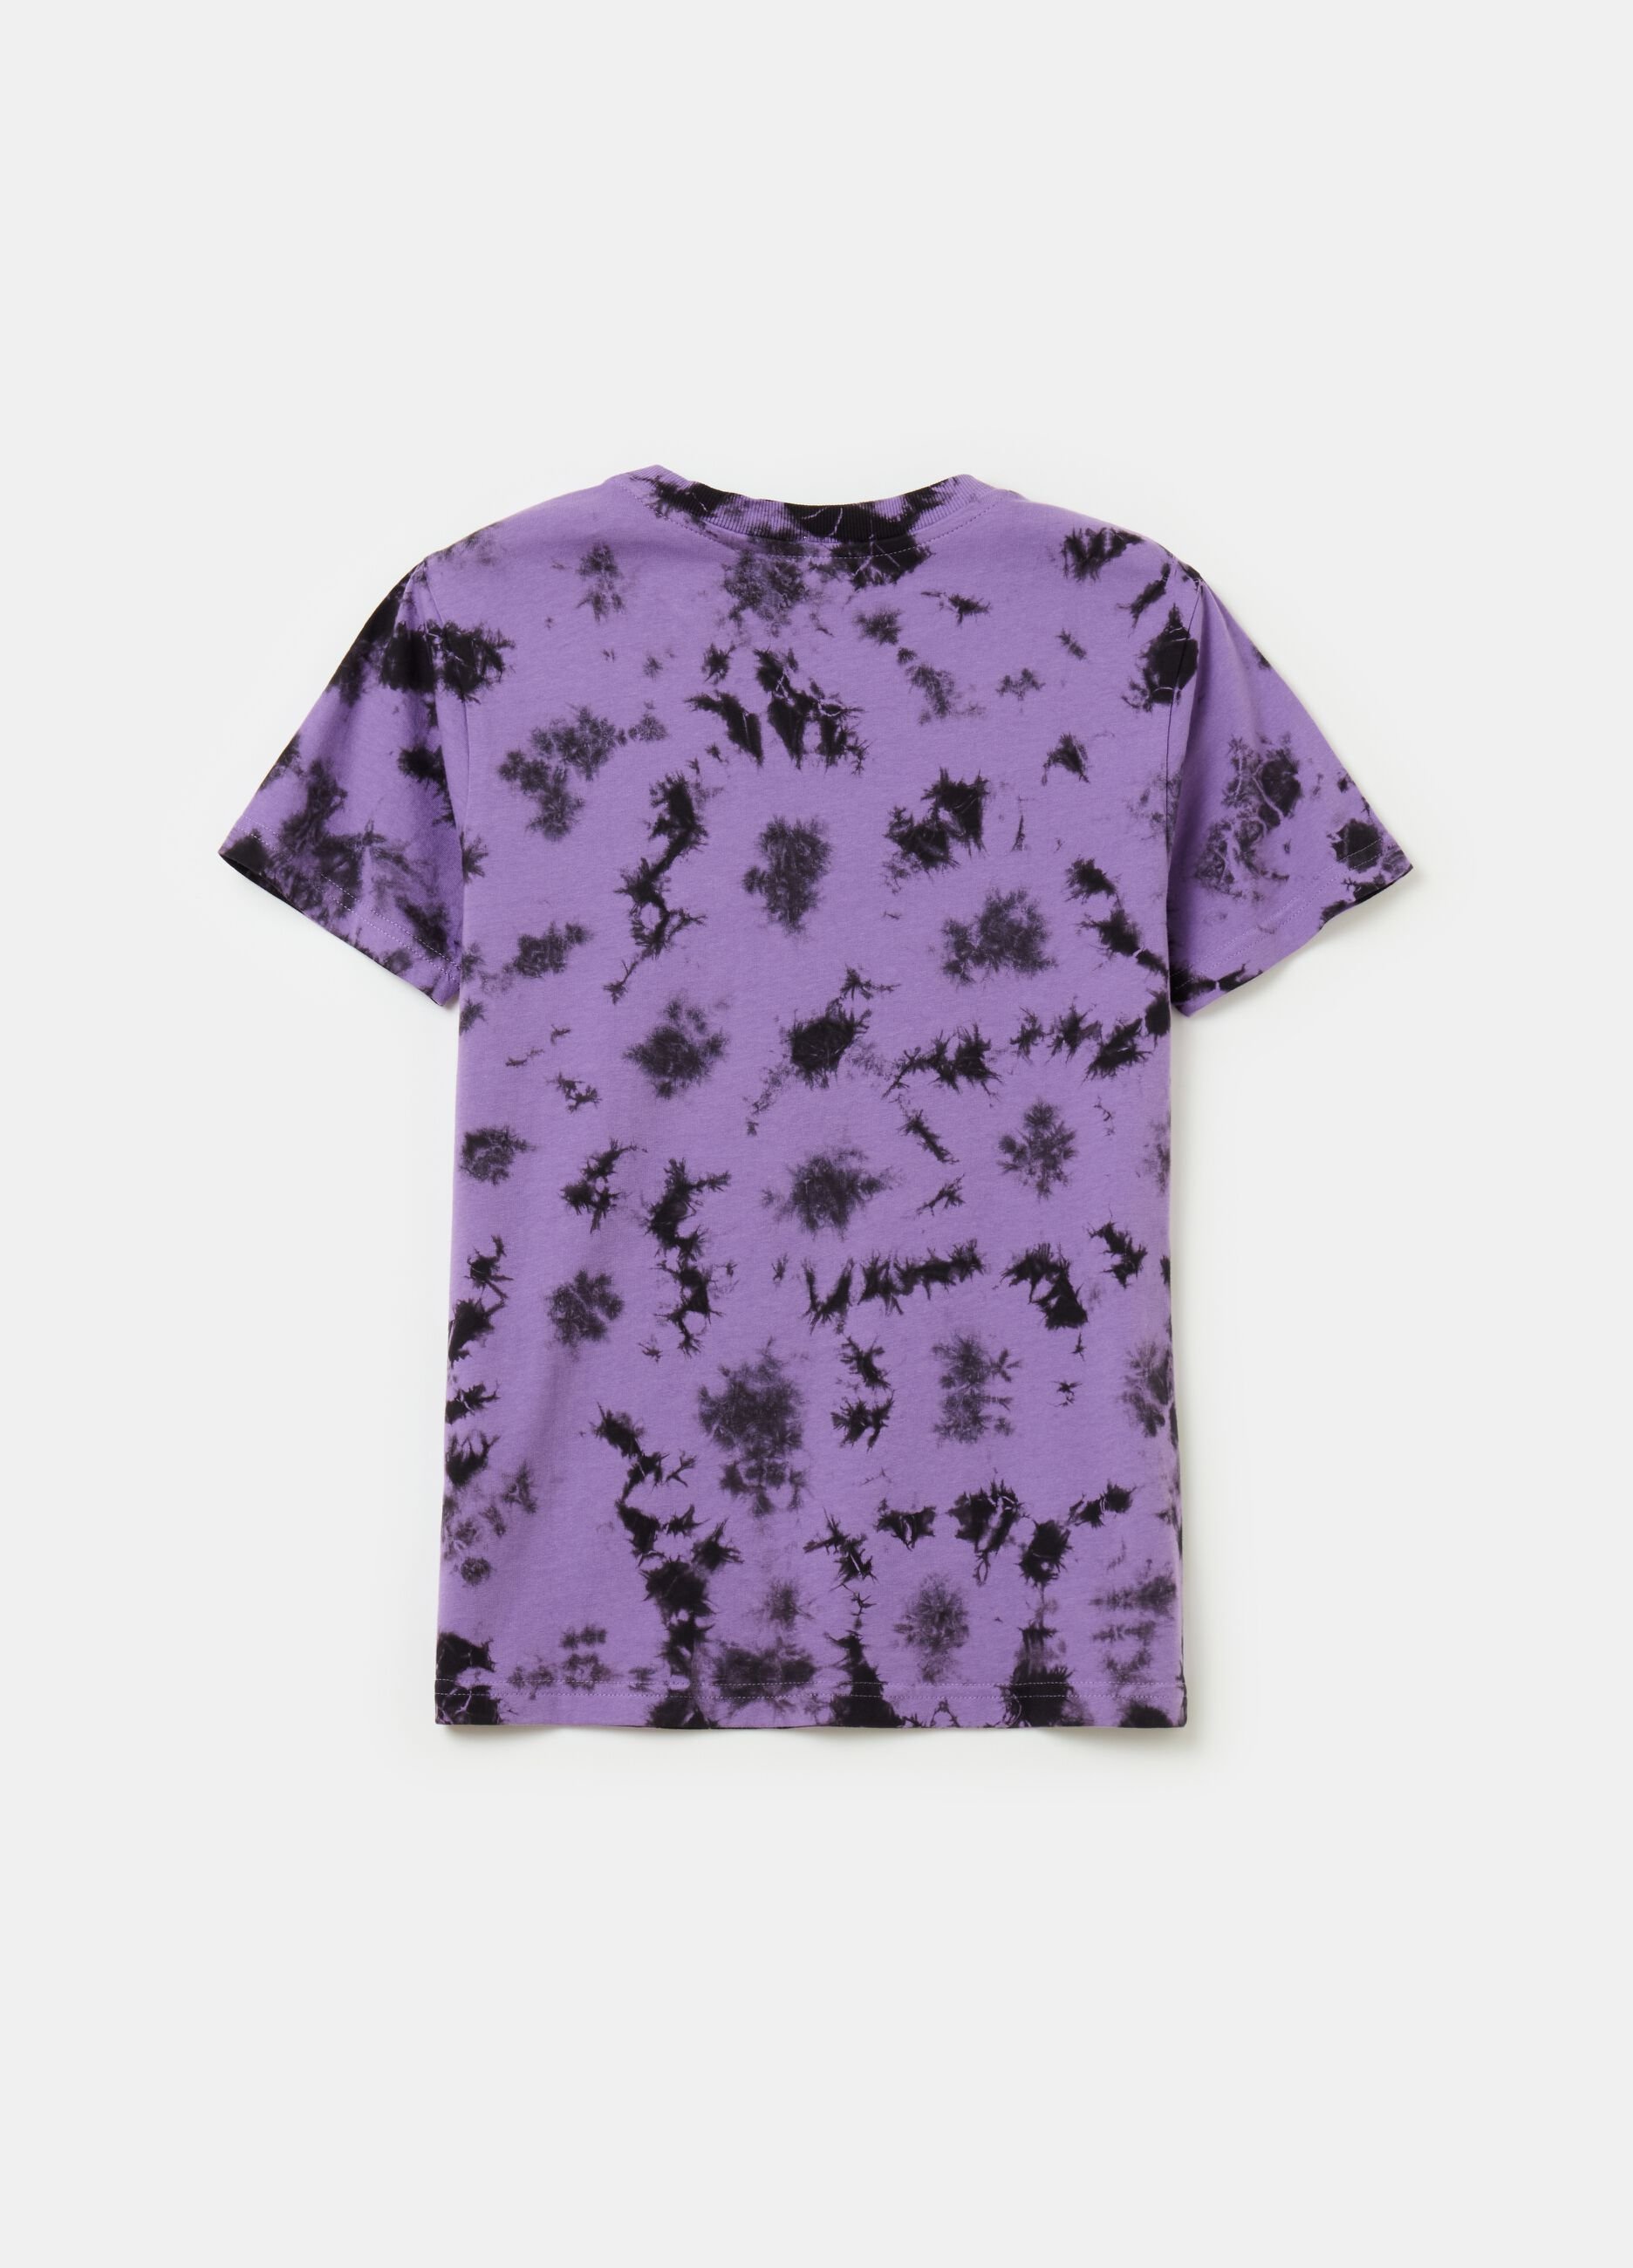 Tie-dye T-shirt with Pokémon Gengar print